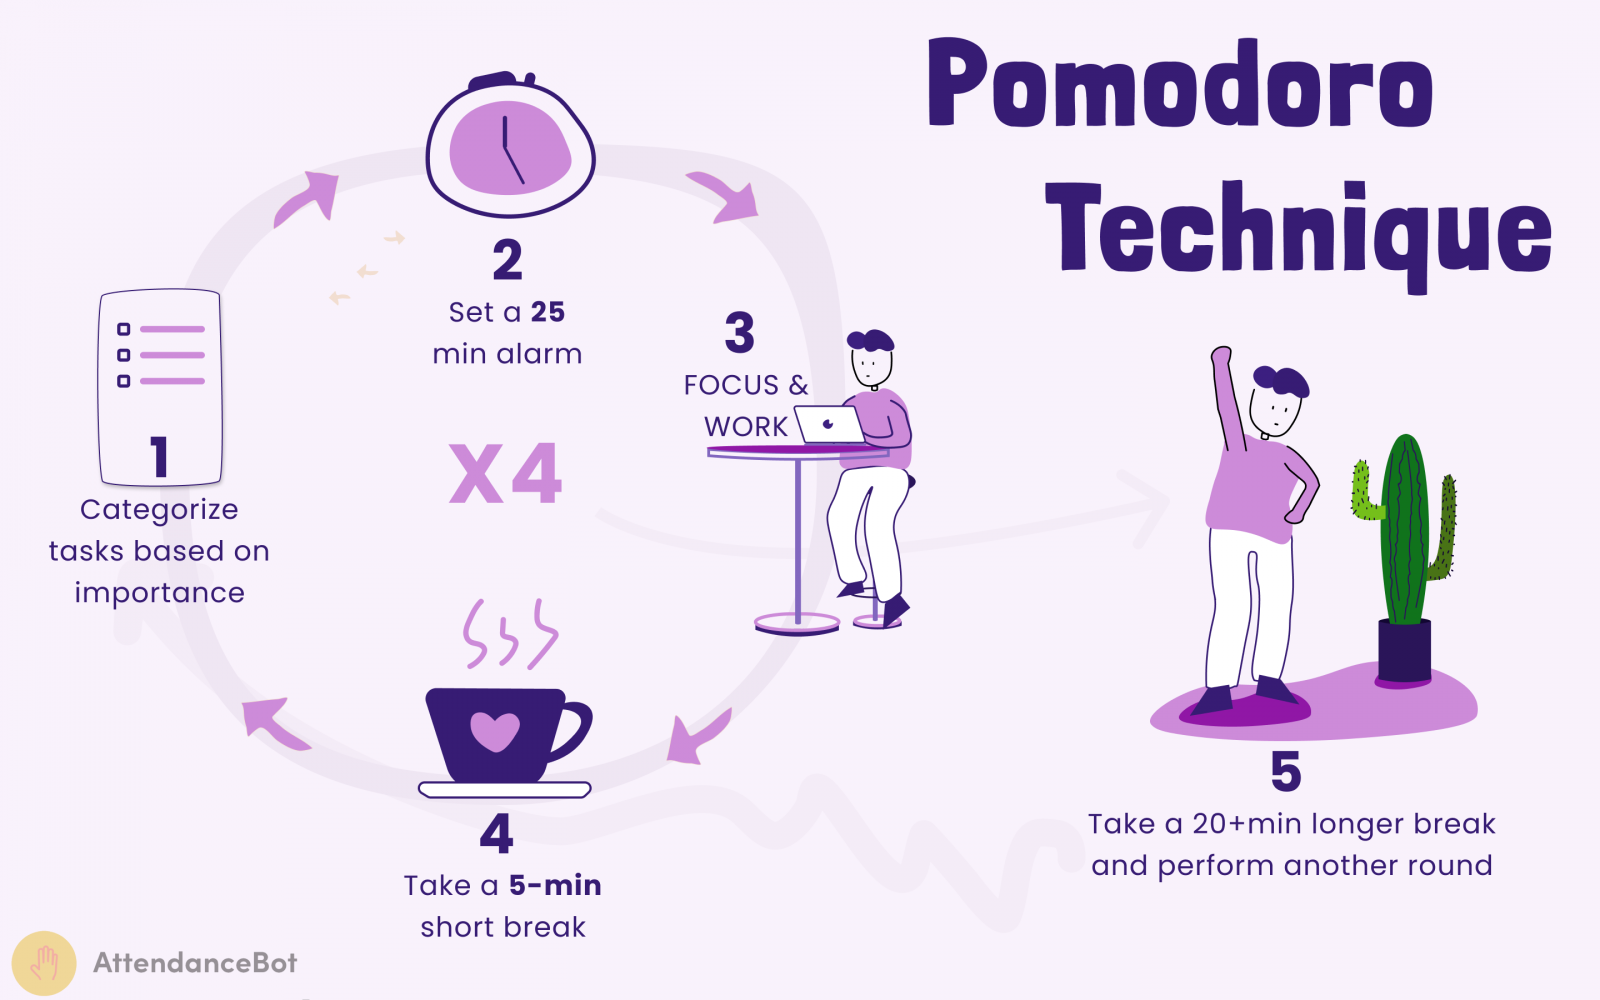 the pomodoro cycle explained